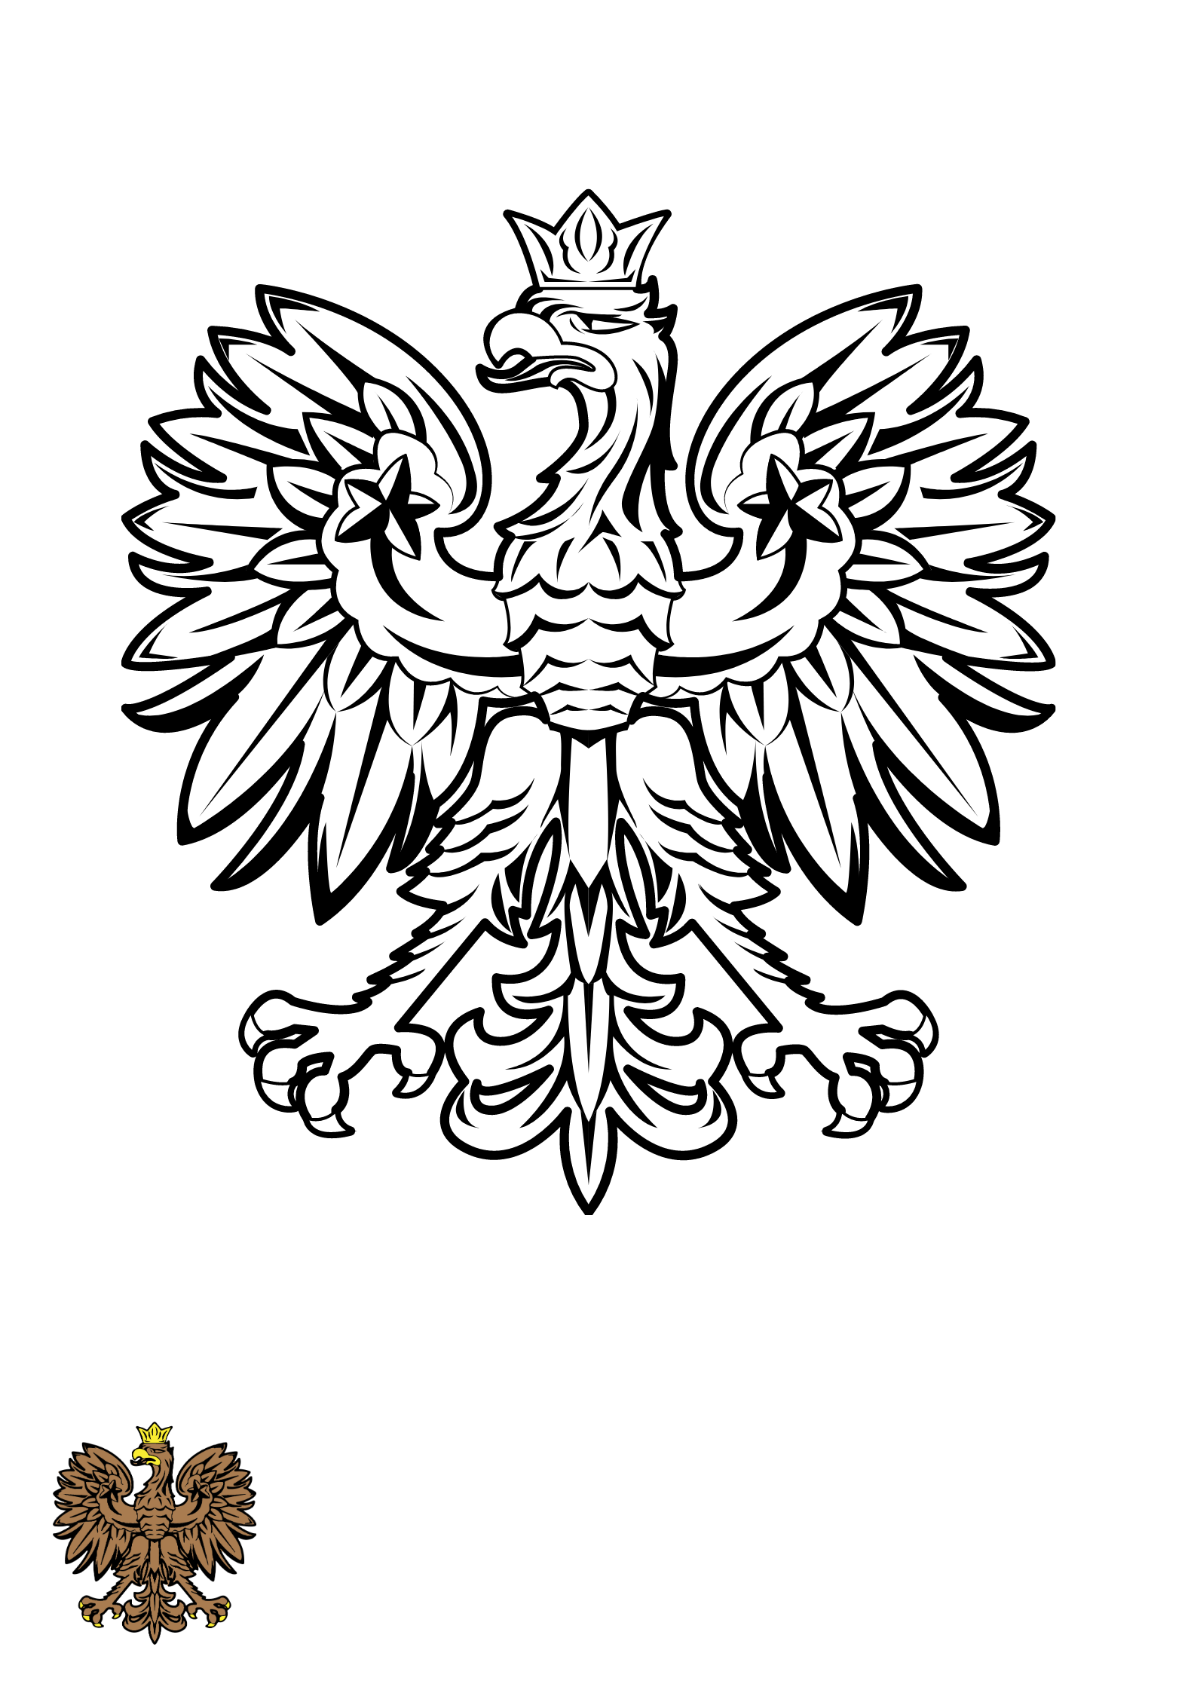 Polish Eagle coloring page